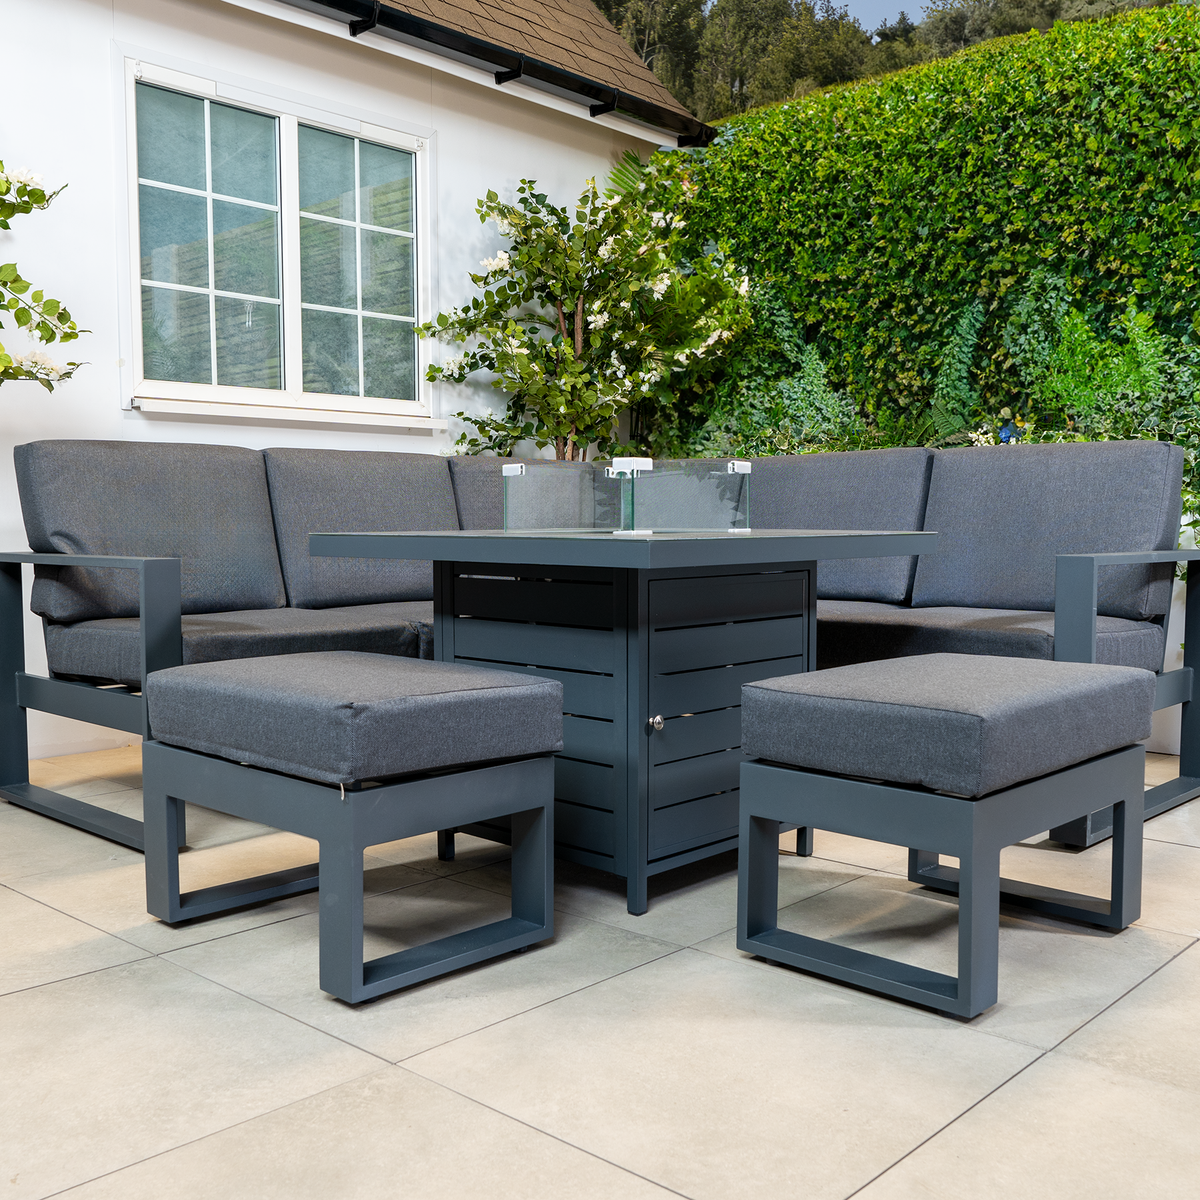 Bracken Outdoors Portland Aluminium Compact Corner Garden Furniture Set with Fire Pit Table